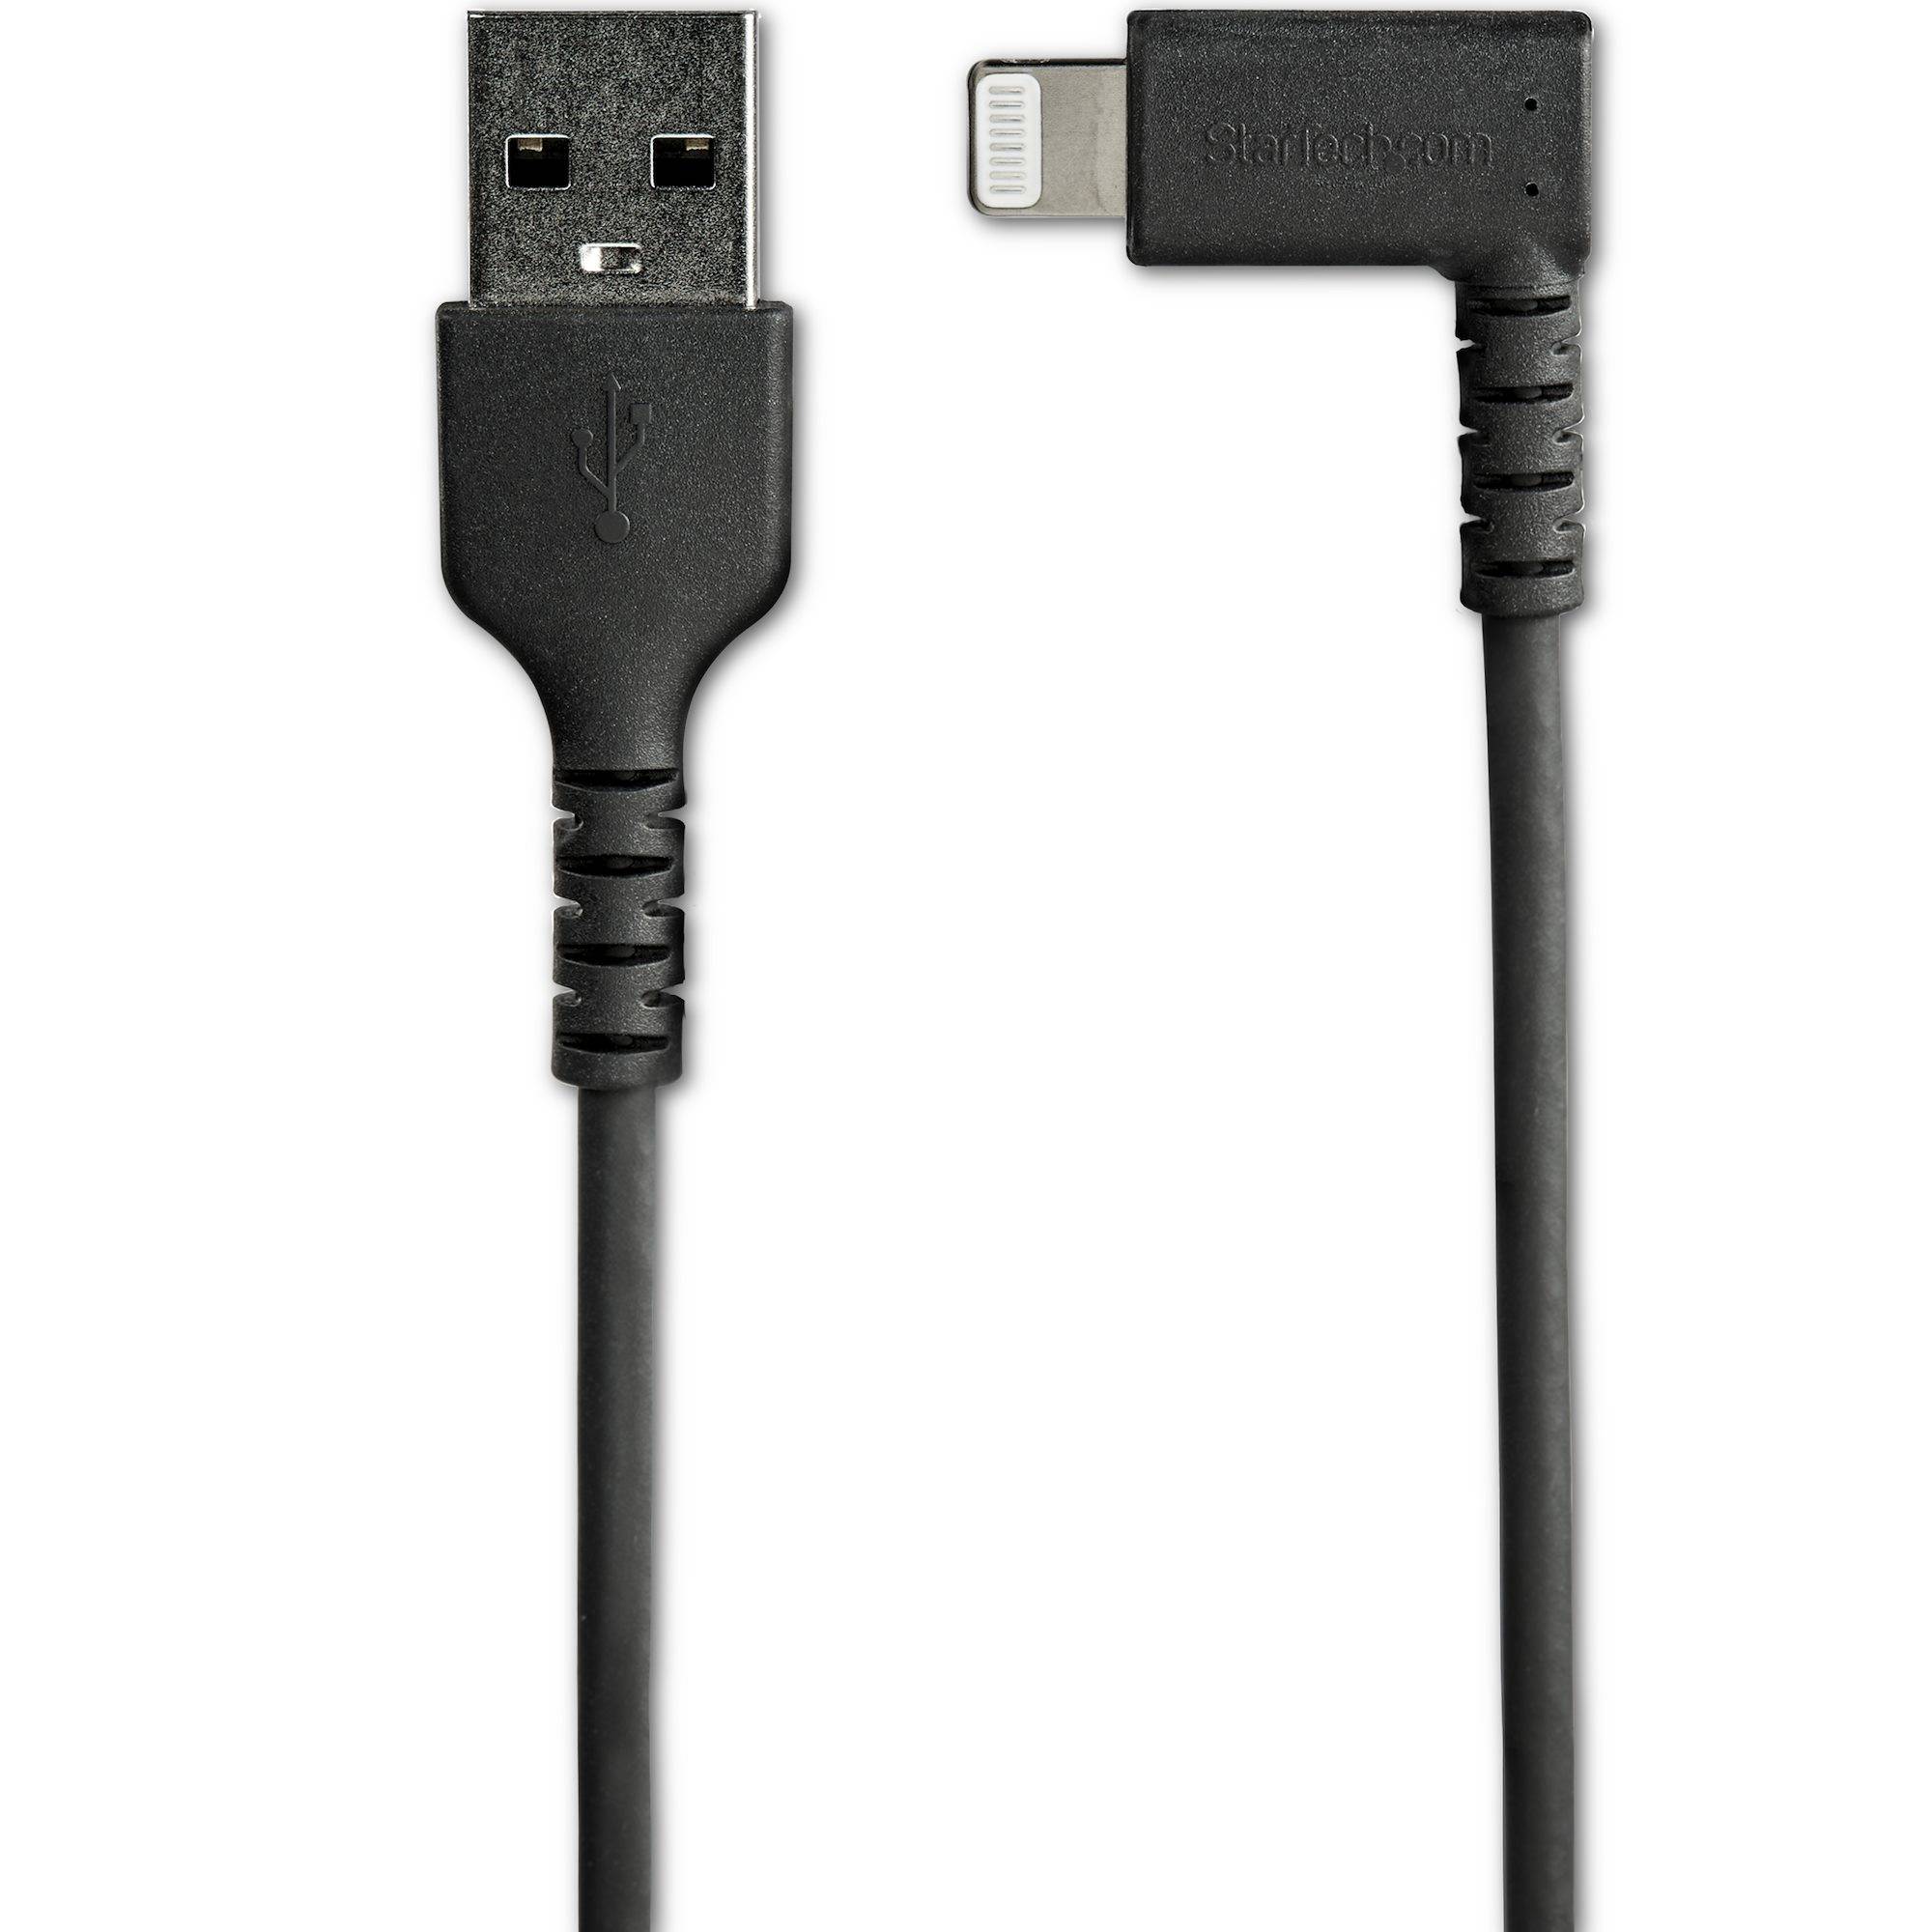 Rca Informatique - image du produit : 1M ANGLED LIGHTNING TO USB CABLE-APPLE MFI CERTIFIED-BLACK